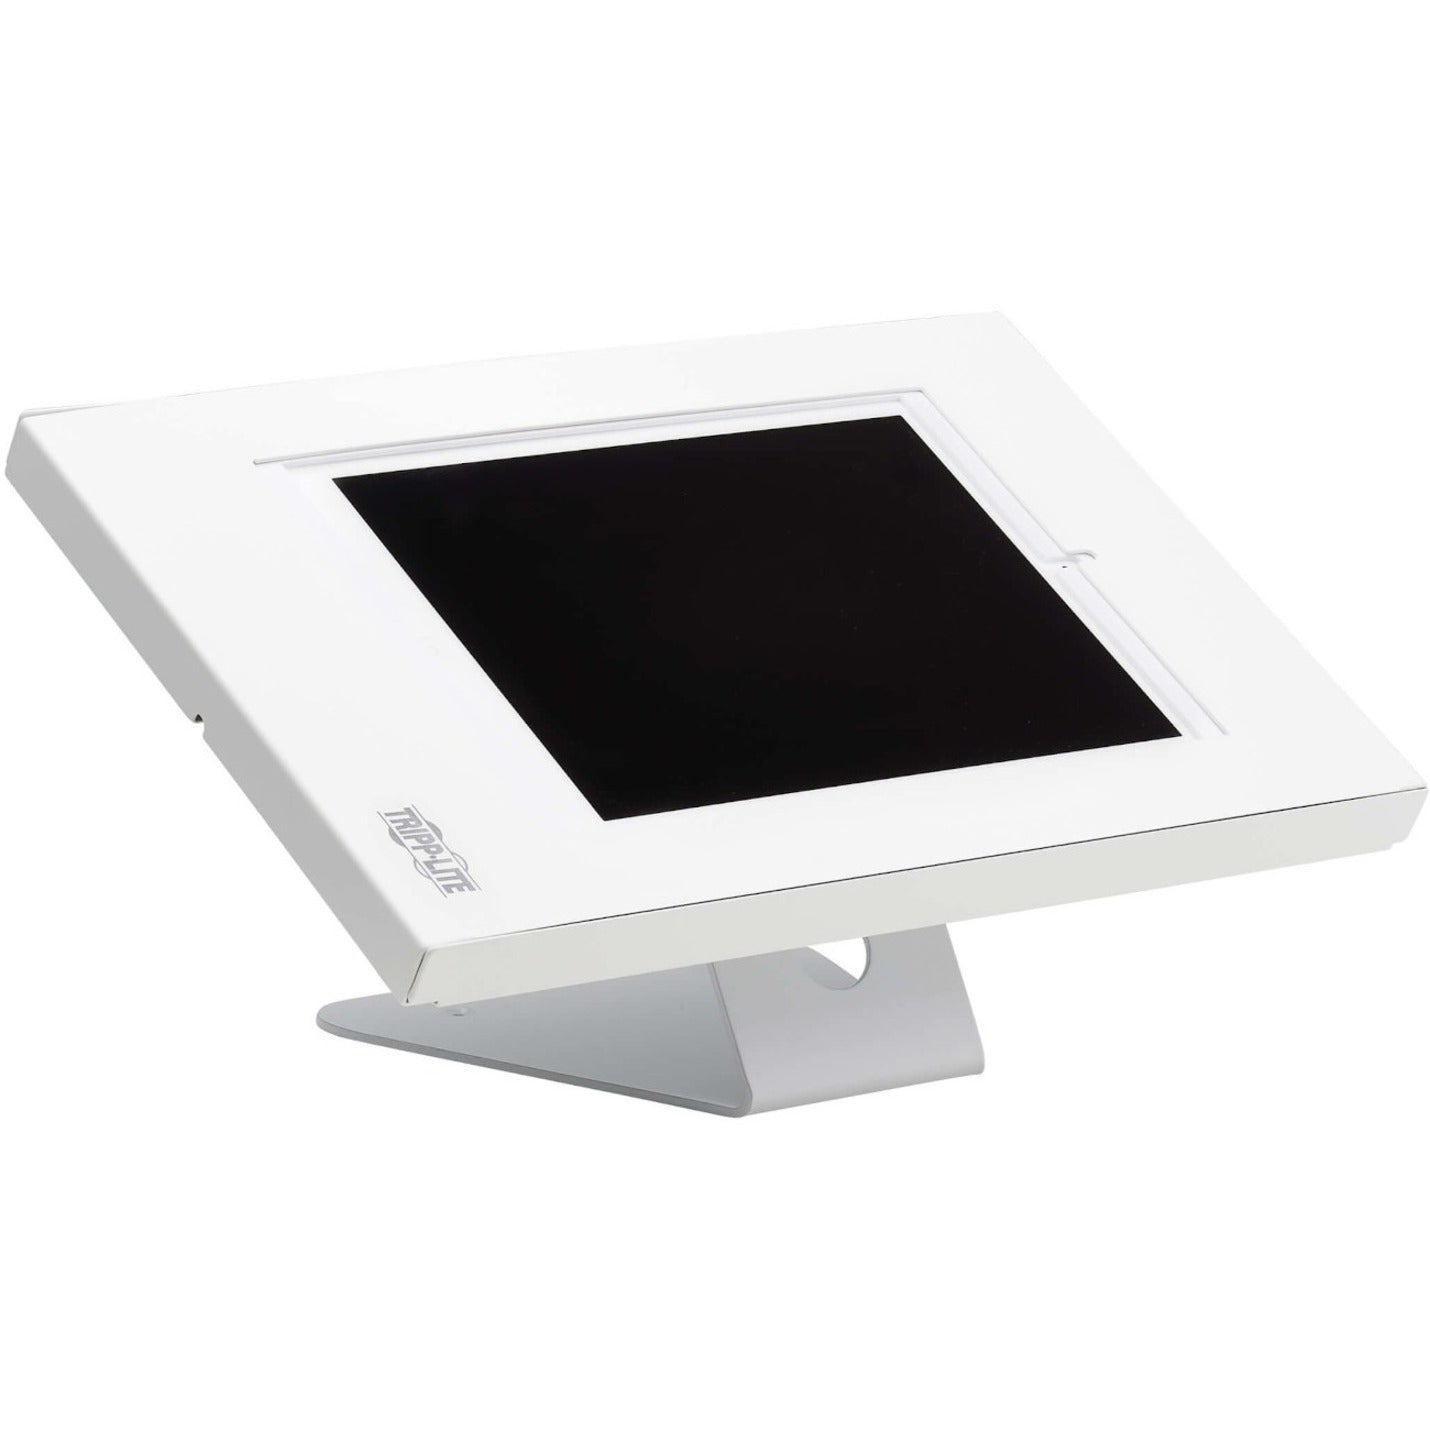 Tripp Lite DMTB911 Secure Mount Tablet 9.7-11 in. White Low Profile Landscape/Portrait Mounting Key Lock Anti-theft